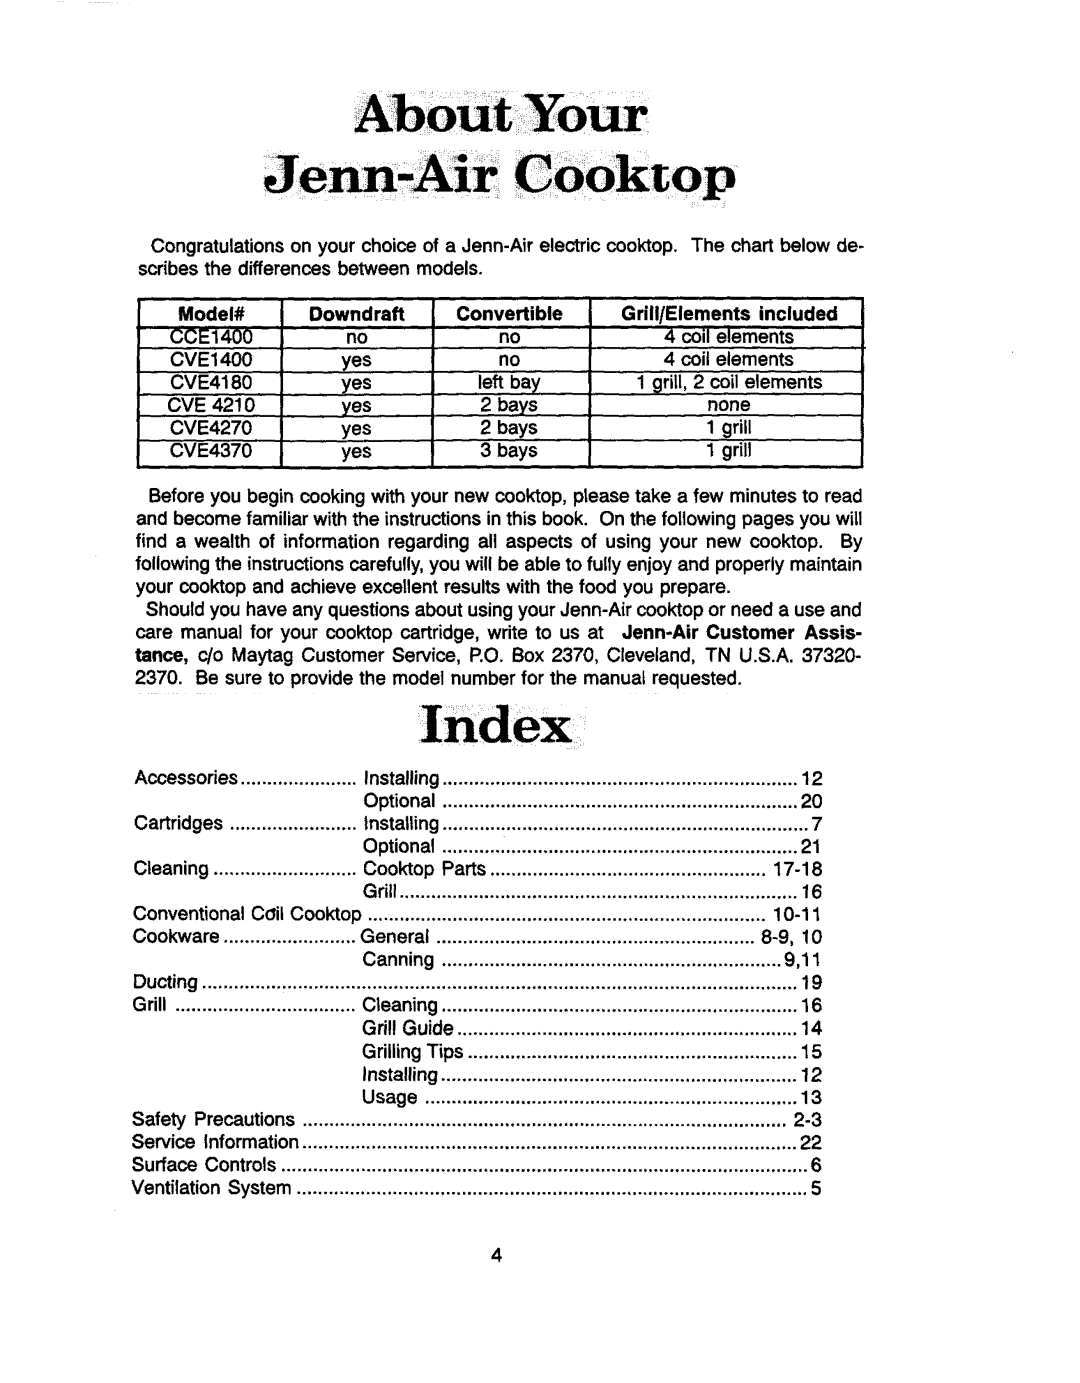 Jenn-Air CCE1400, CVE4370, CVE4180, CVE4210, CVE1400, CVE4270 manual Convertible 